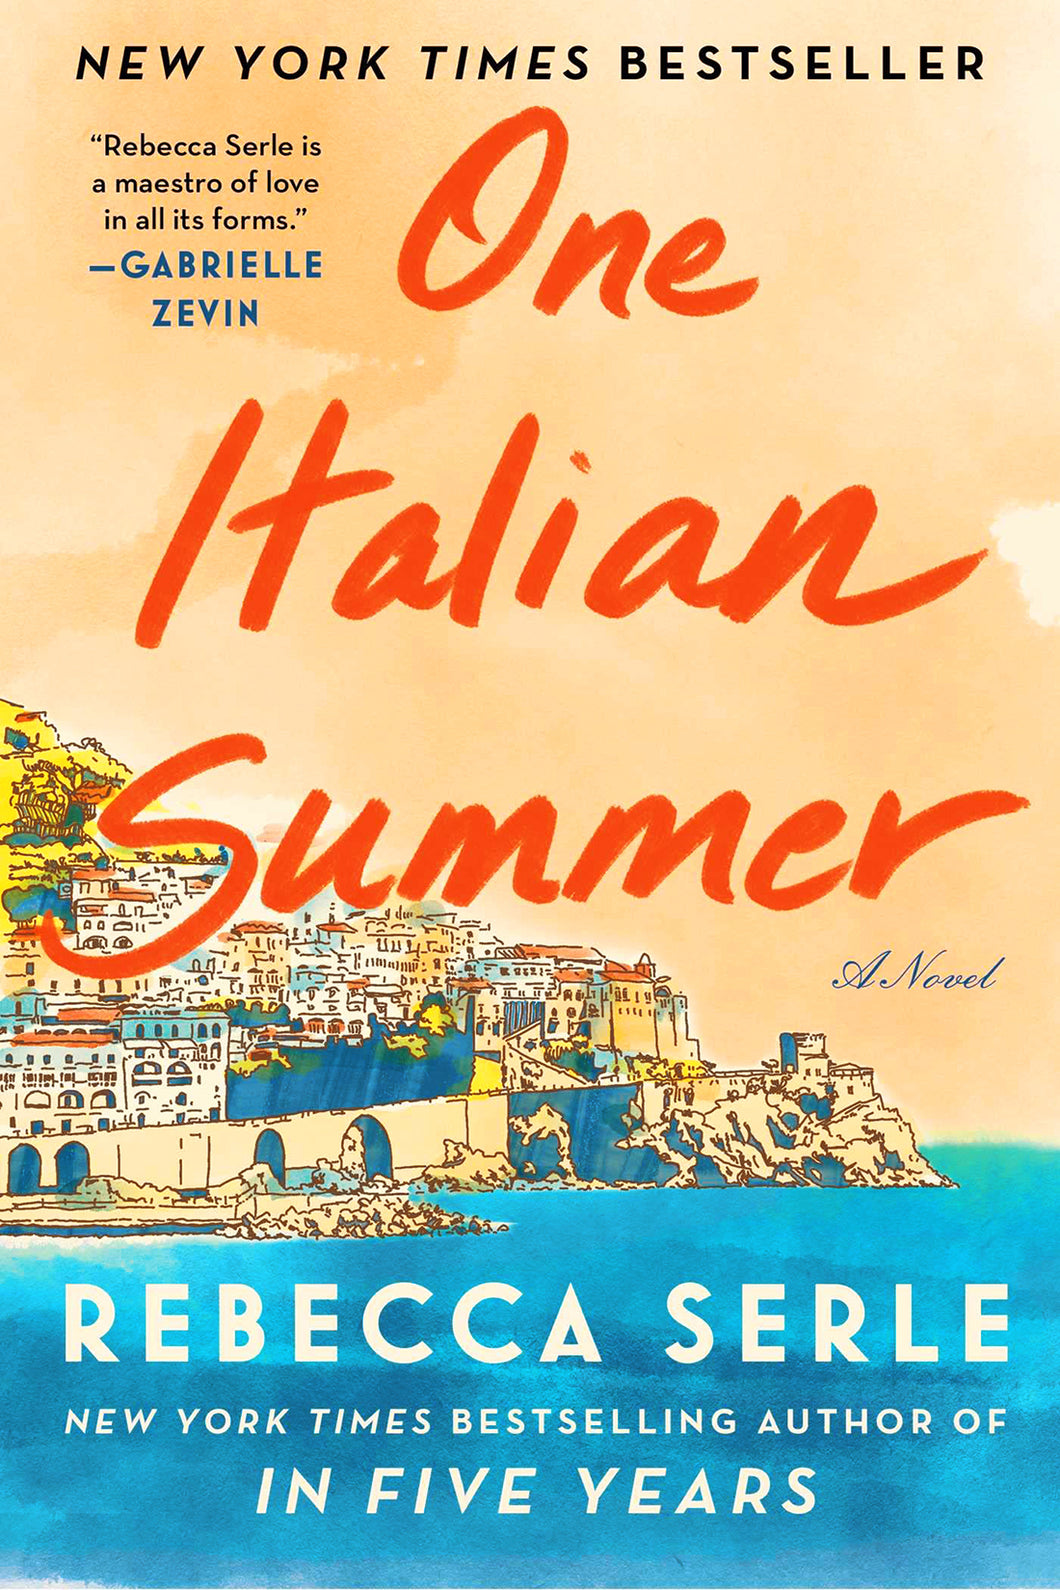 One Italian Summer by Rebecca Serle / Hardcover - NEW BOOK OR BOOK BOX